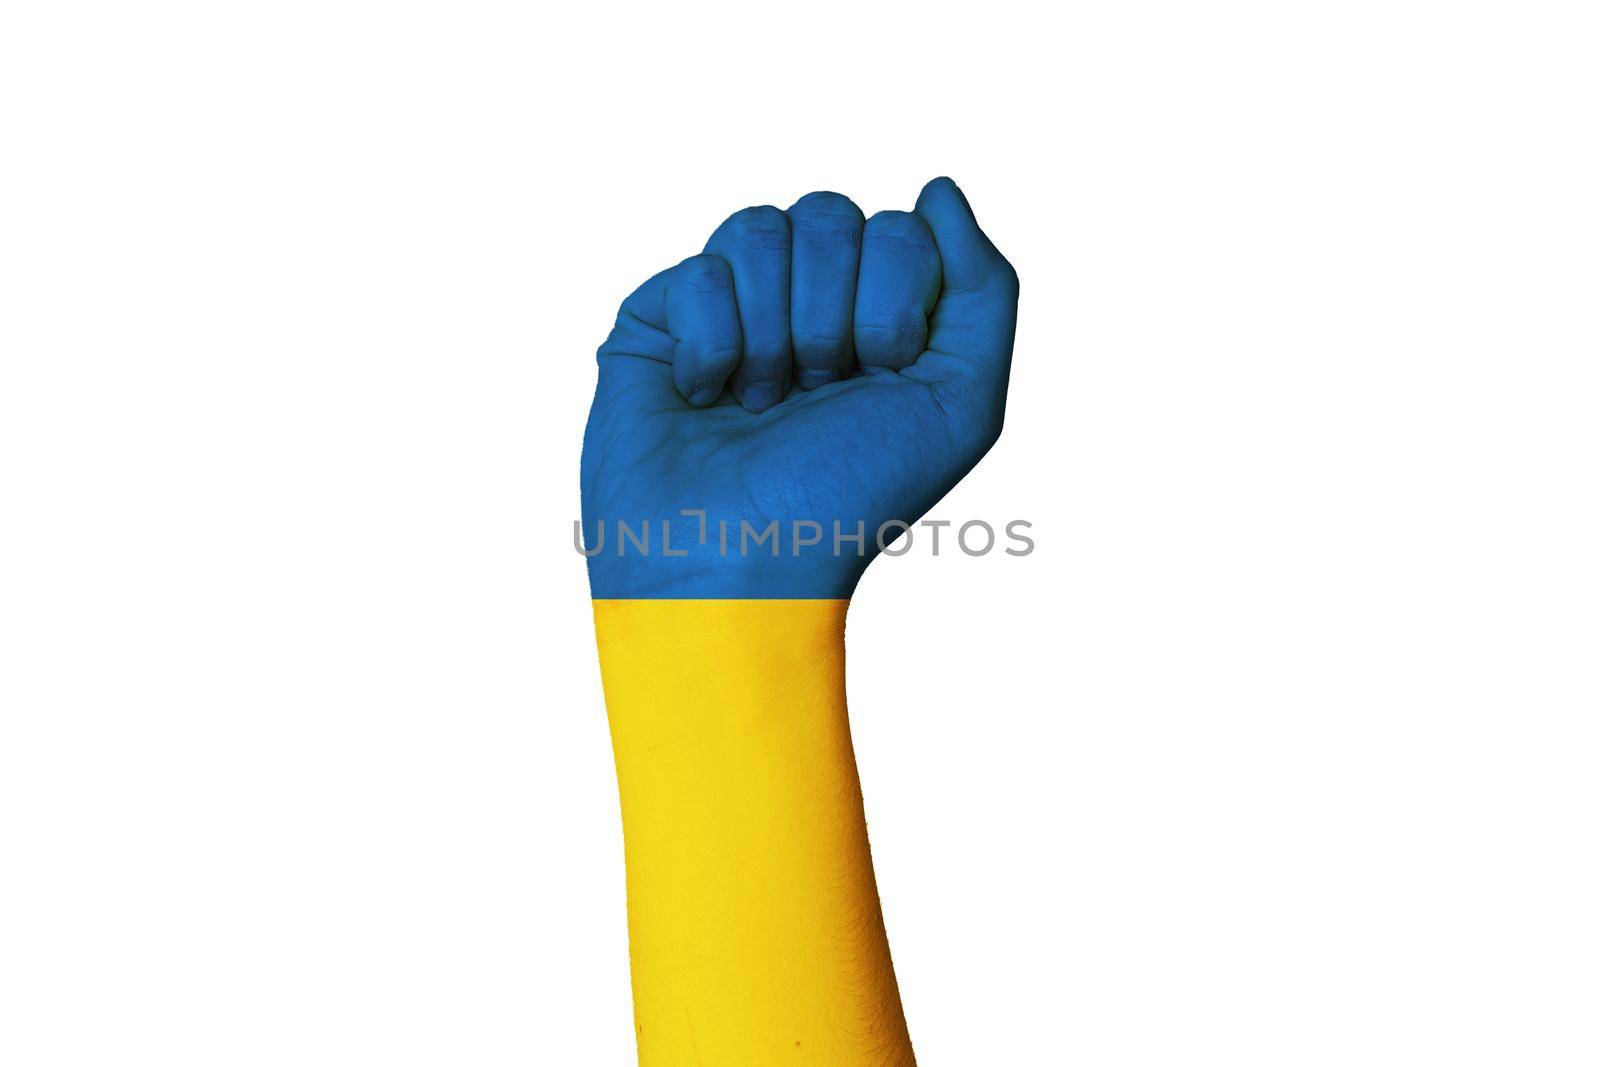 Raised Ukrainian fist flag on white background. Stop war. Putin invasion